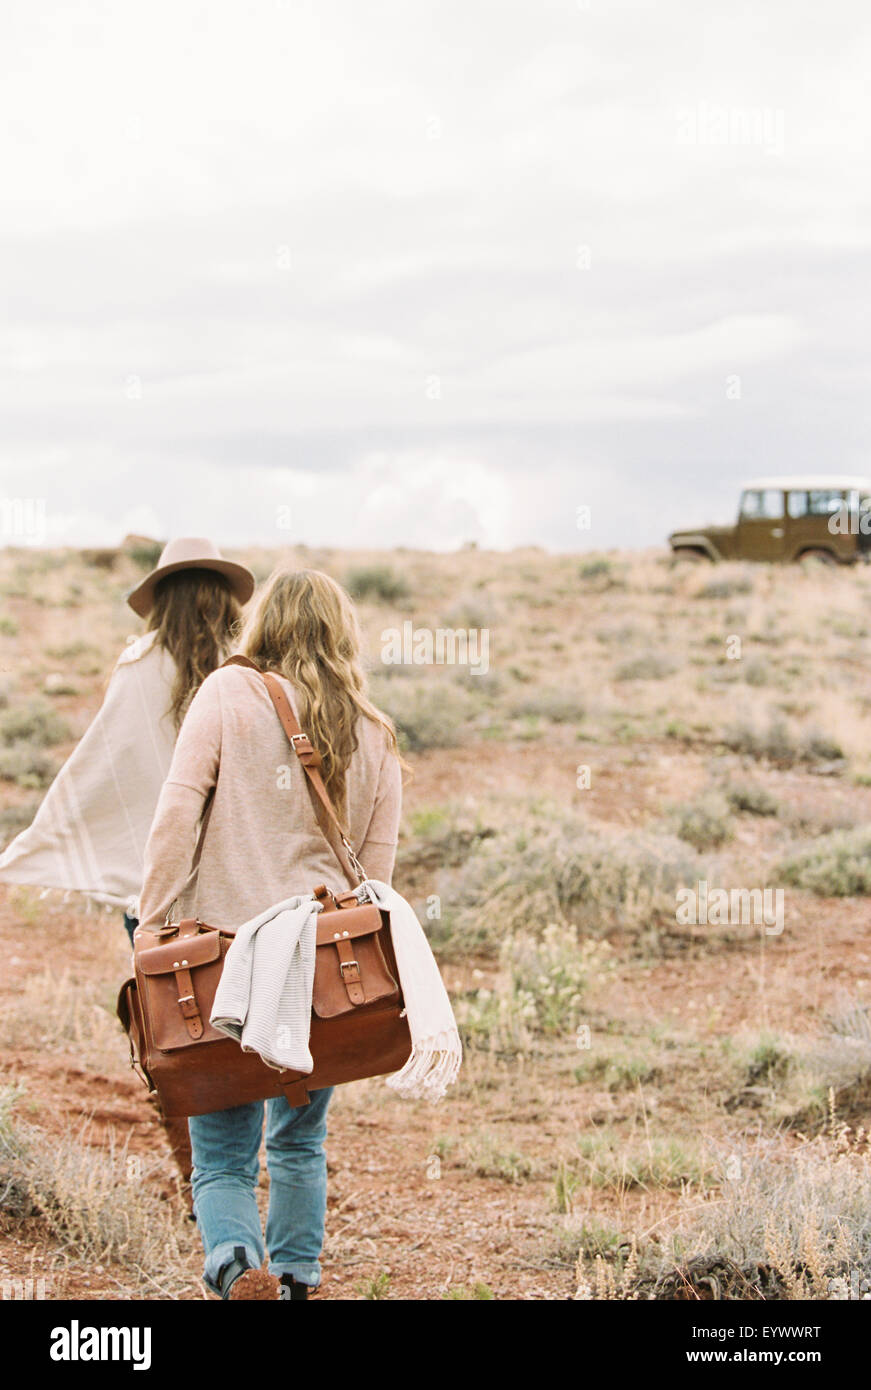 Two women walking towards 4x4 parked in a desert. Stock Photo